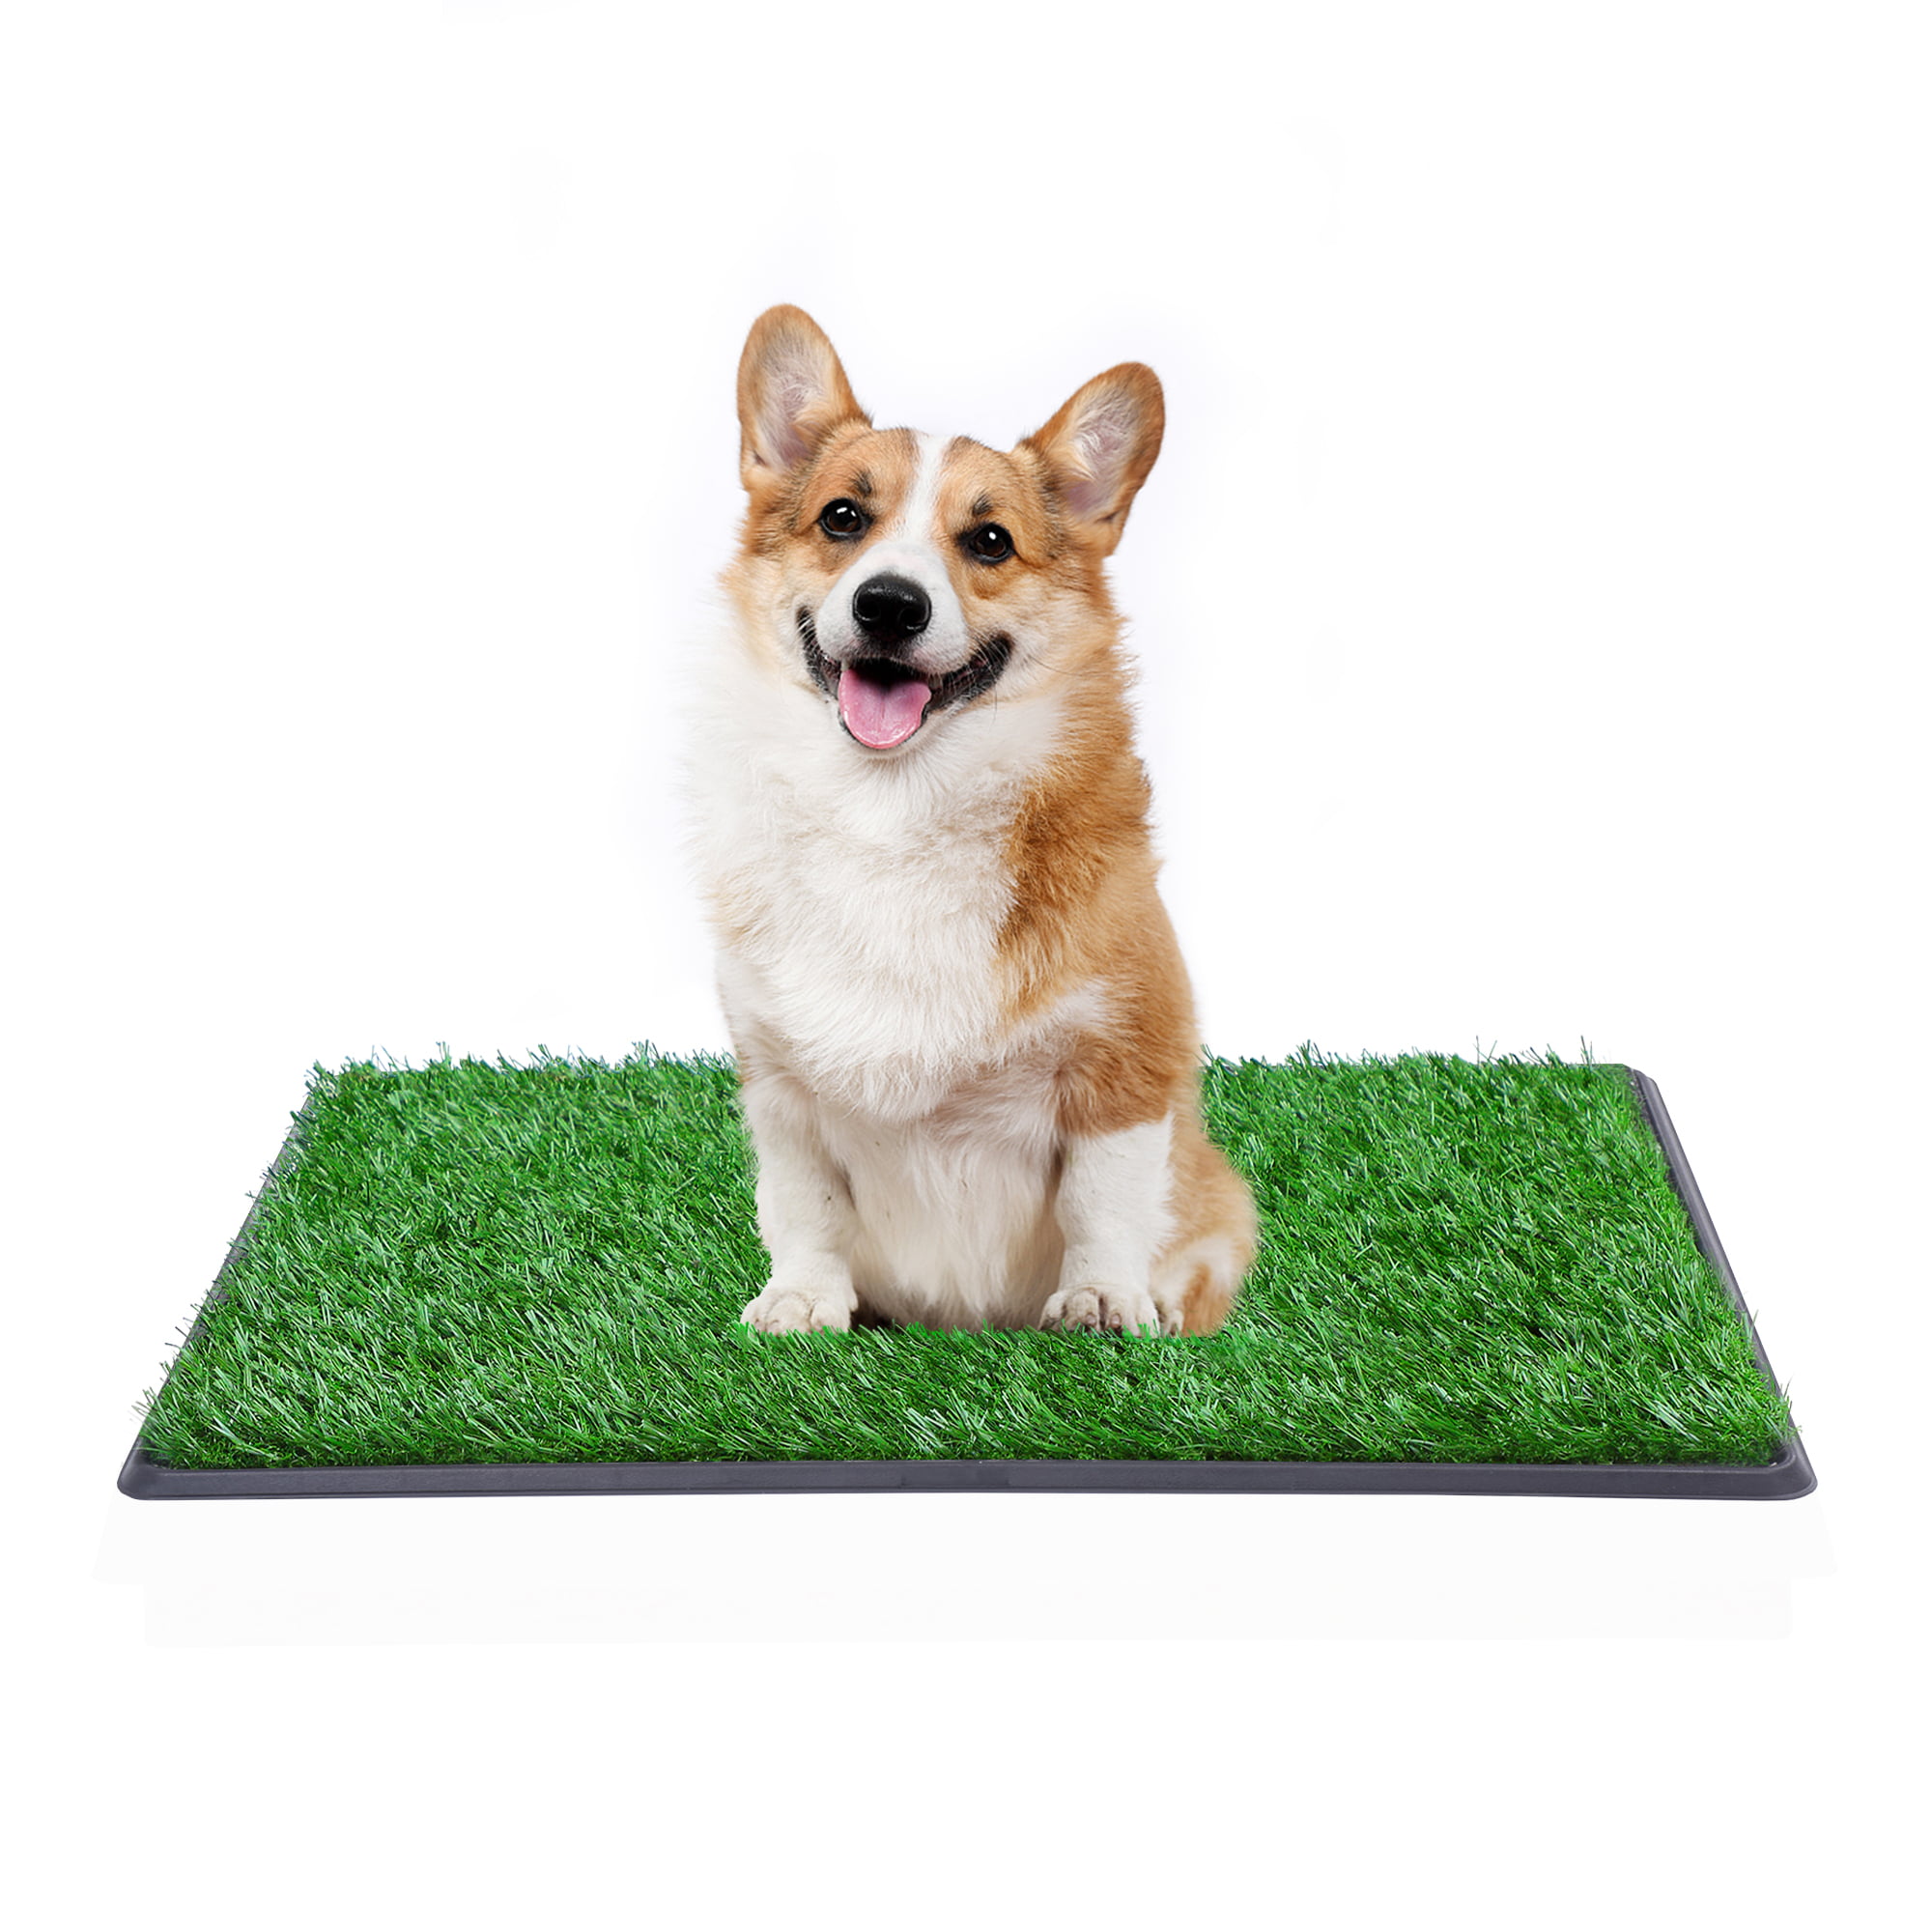 30"x20" Puppy Pet Potty Training Pee Indoor Toilet Dog Grass Pad Mat Turf Patch 